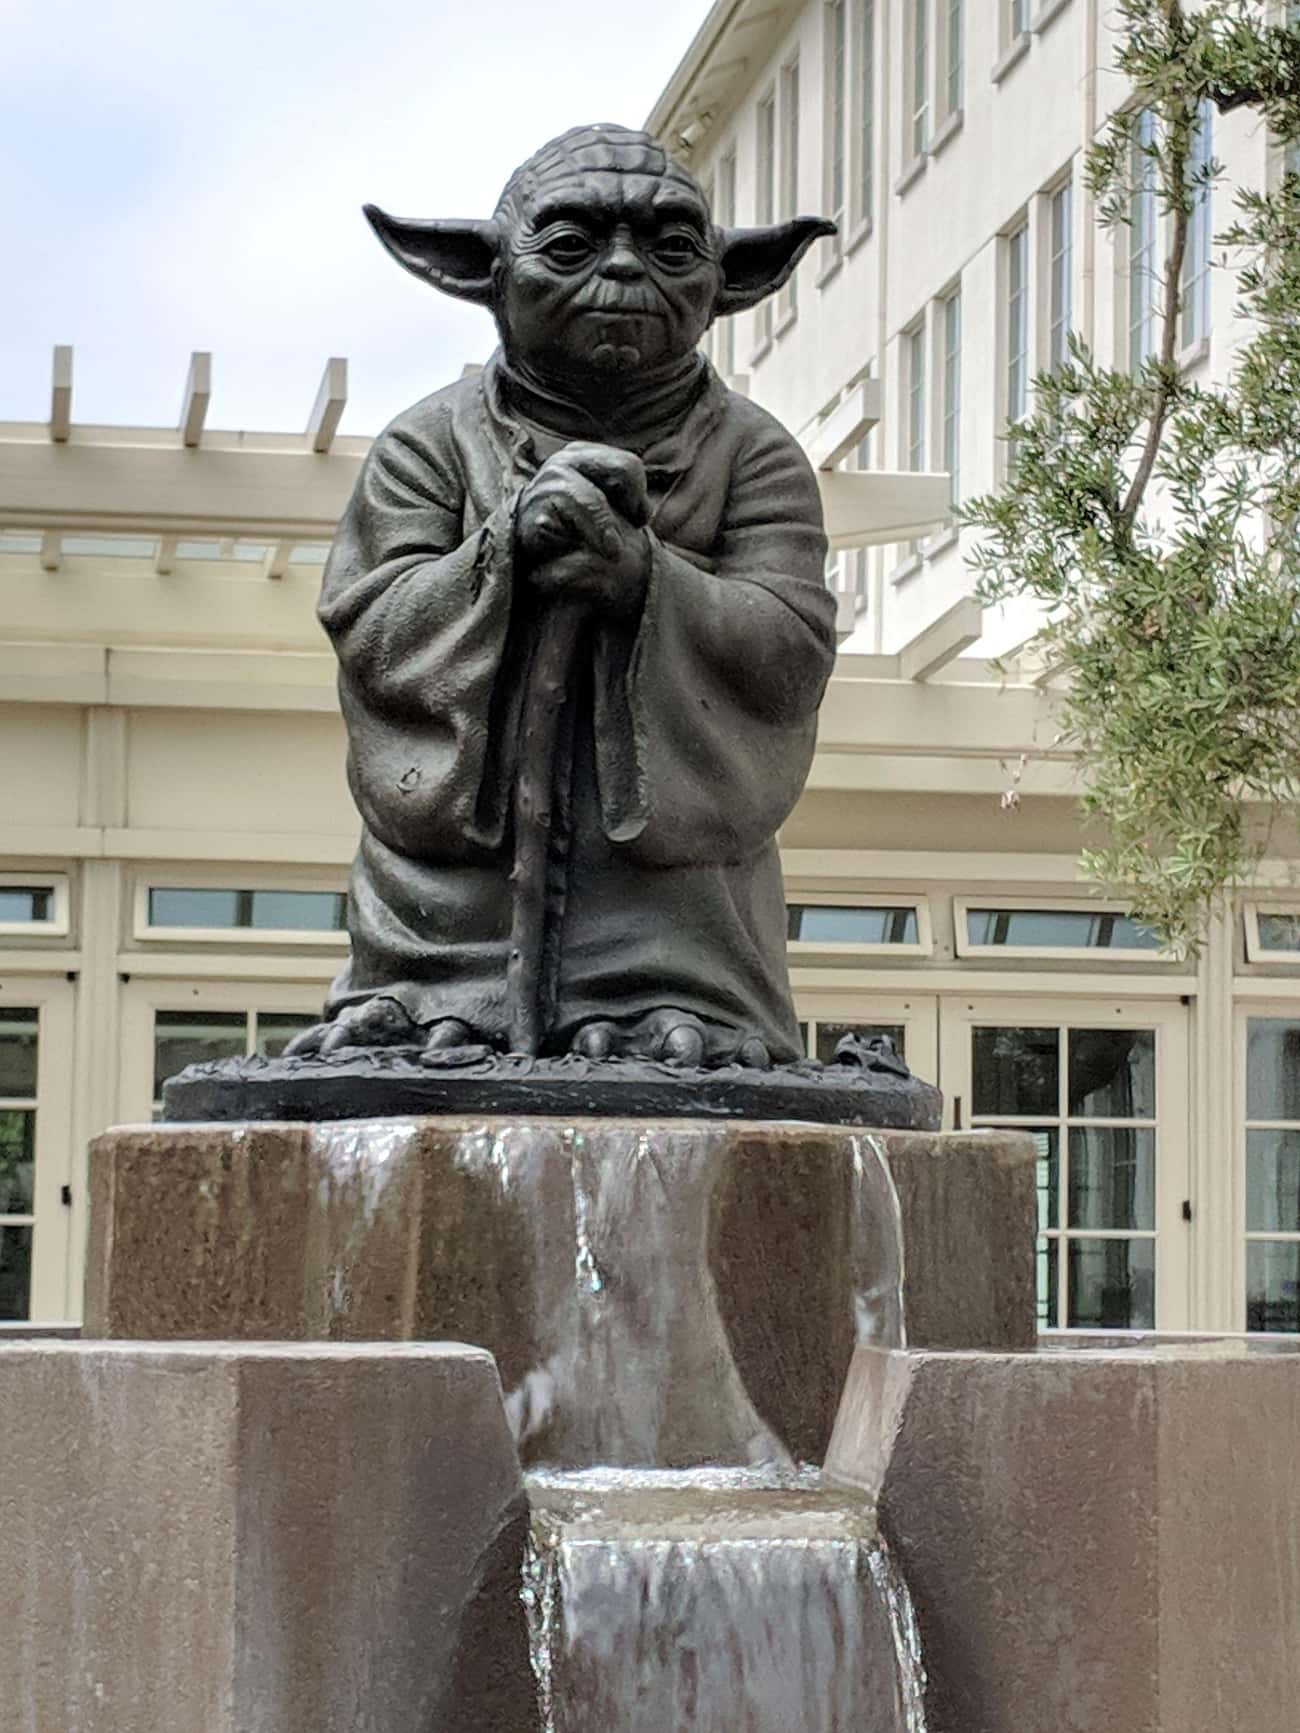 Visit Yoda's Fountain, You Can